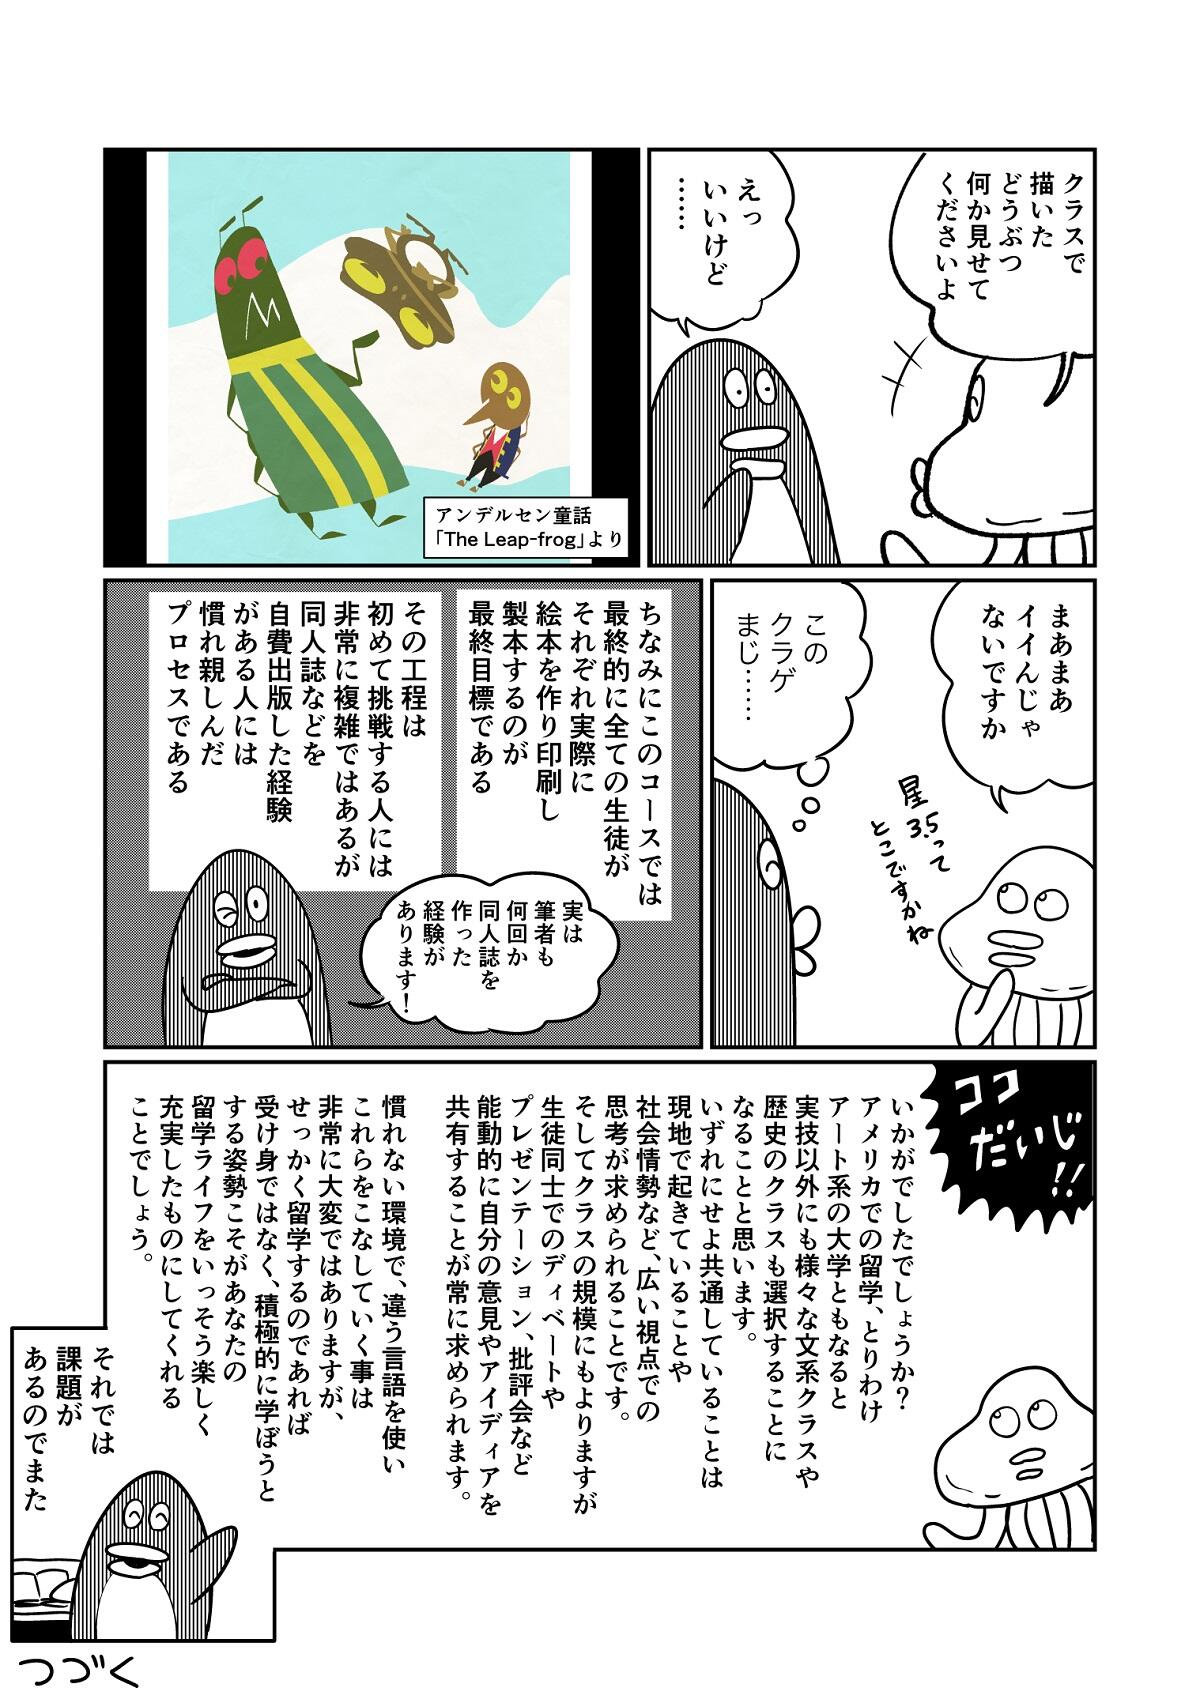 https://www.ryugaku.co.jp/column/images/jawamura14_6_1200.jpg